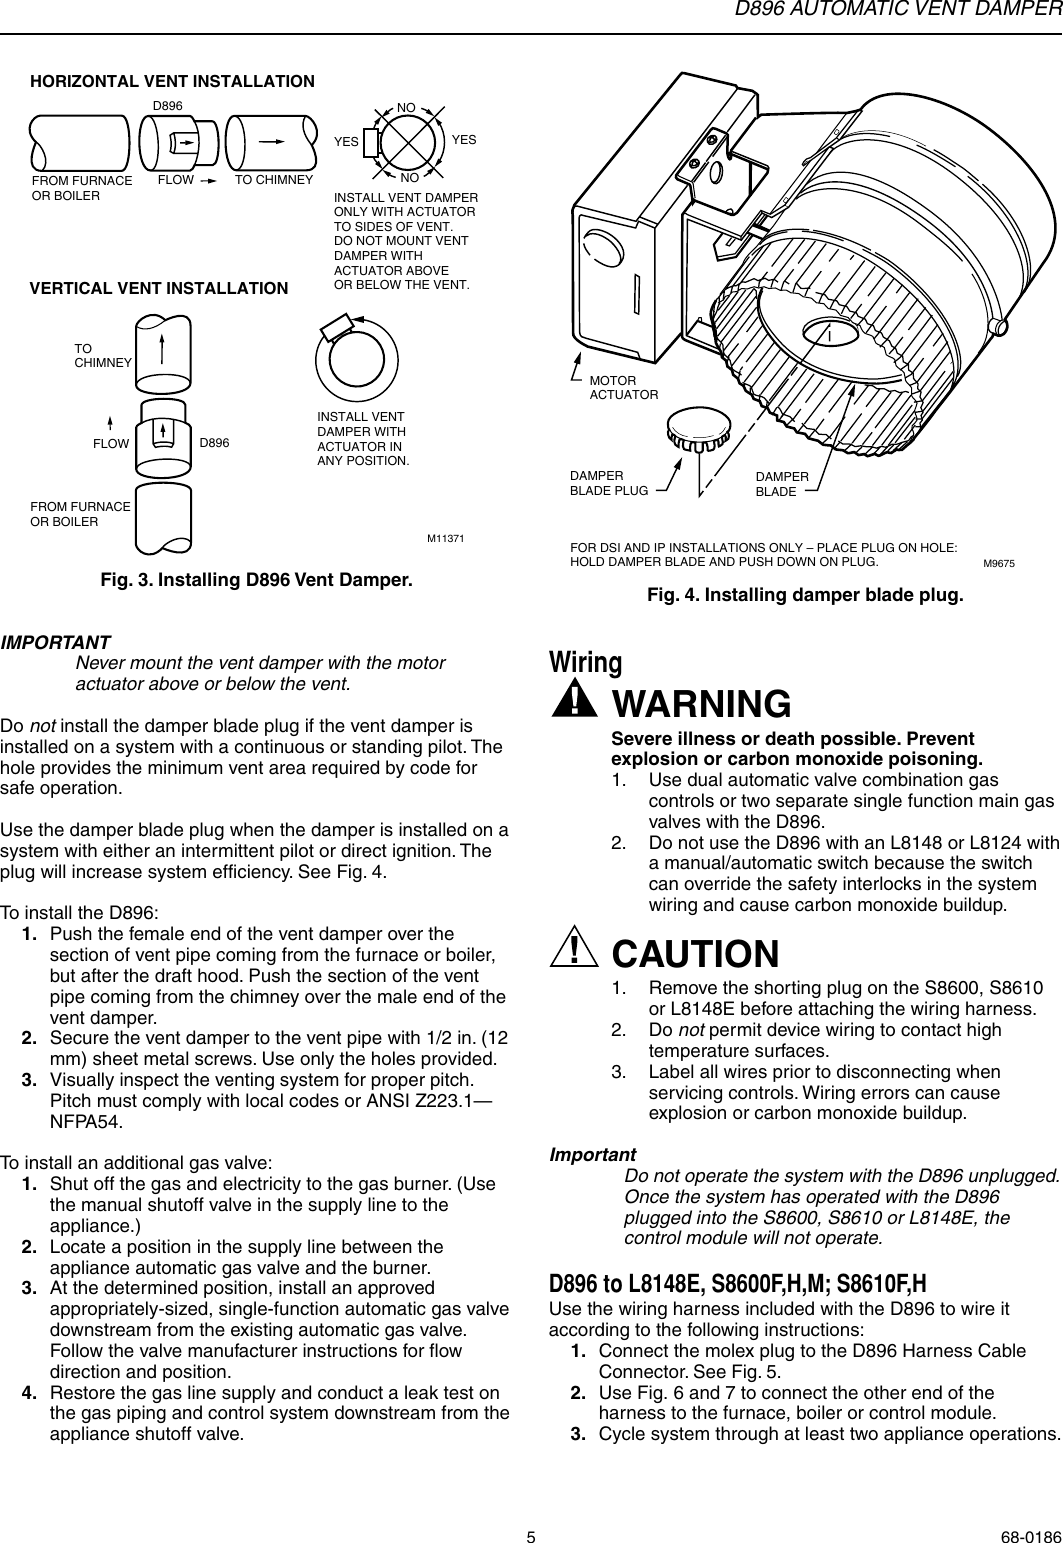 Page 5 of 12 - Honeywell Honeywell-Automatic-Vent-Damper-D896-Users-Manual- 68-0186 - D896 Automatic Vent Damper  Honeywell-automatic-vent-damper-d896-users-manual